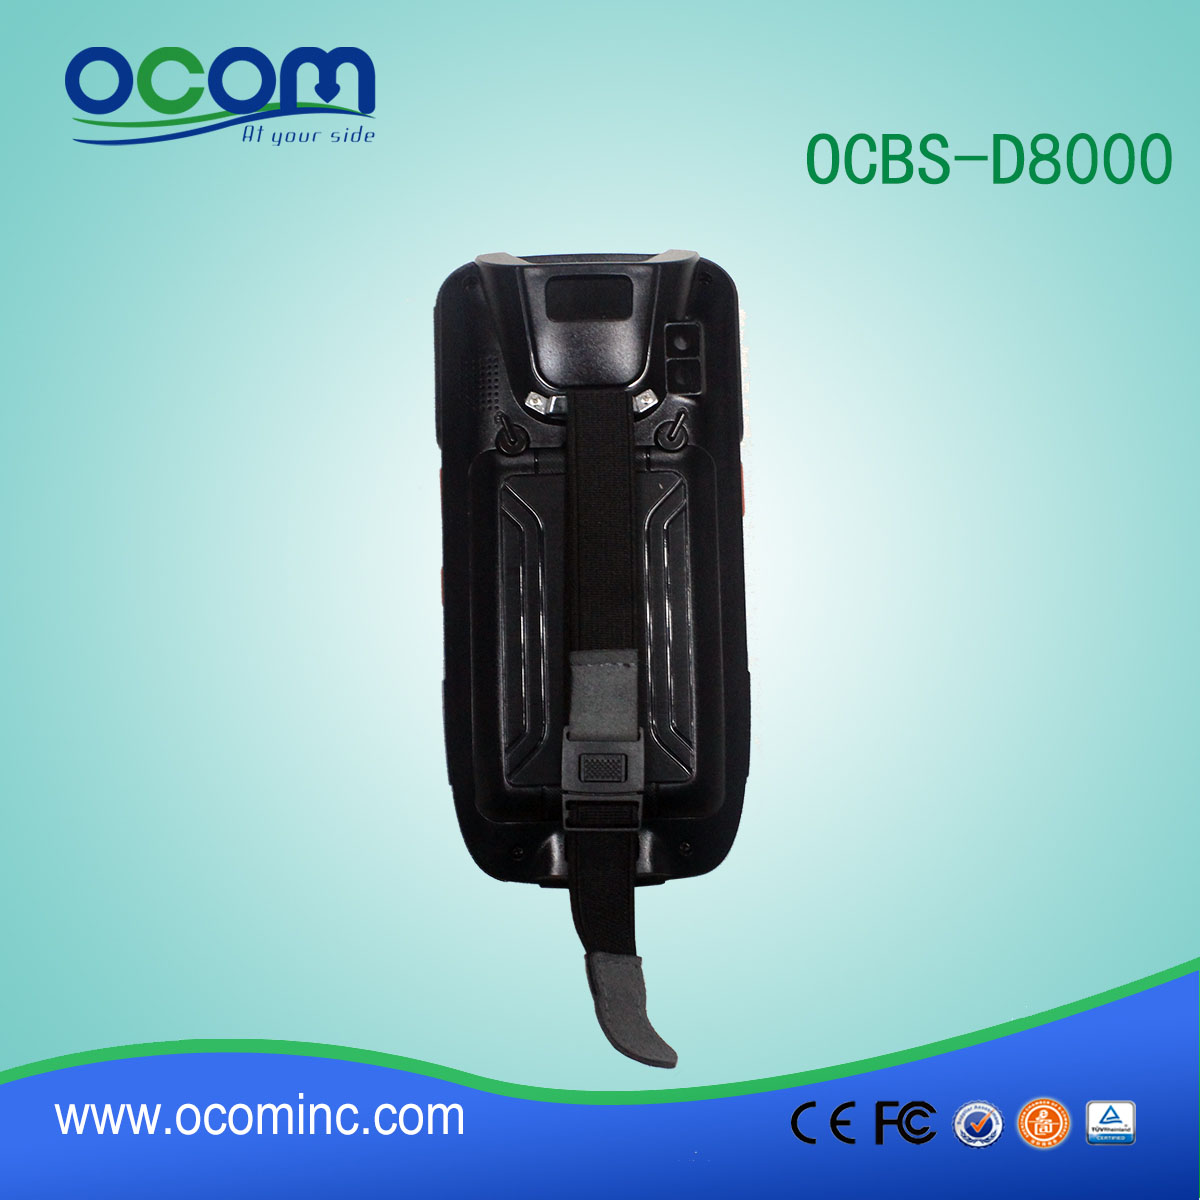 OCBs-D8000 Android pda scanner laser di codici a barre